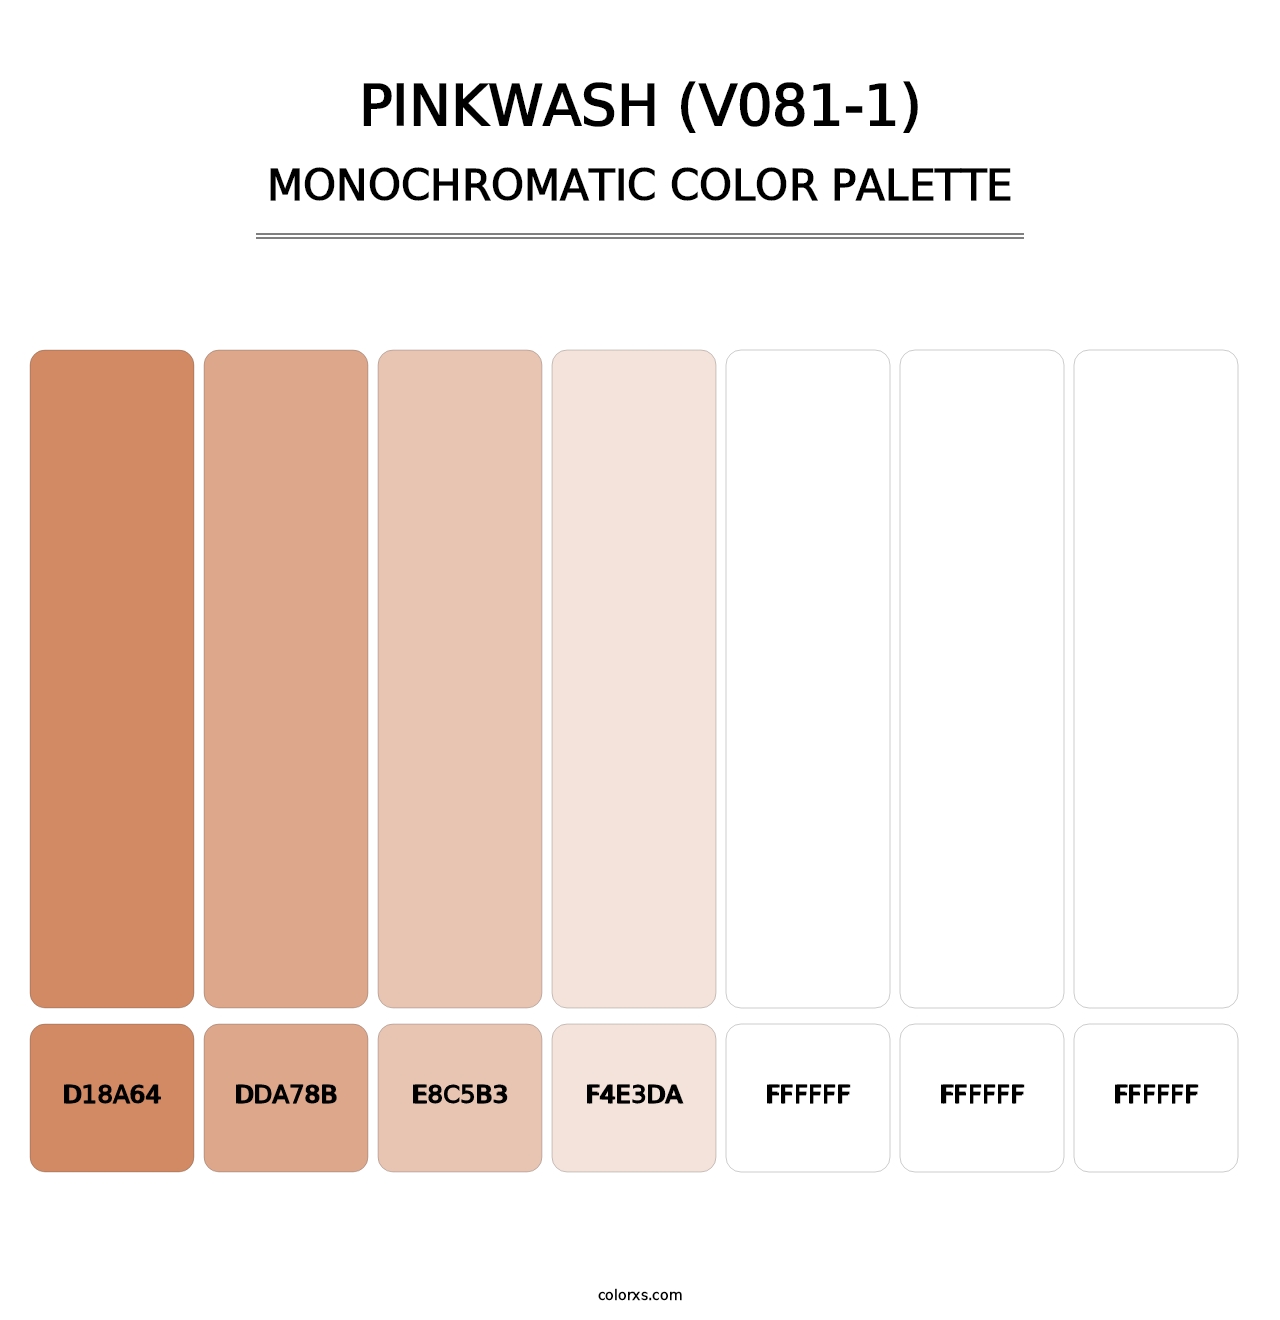 Pinkwash (V081-1) - Monochromatic Color Palette